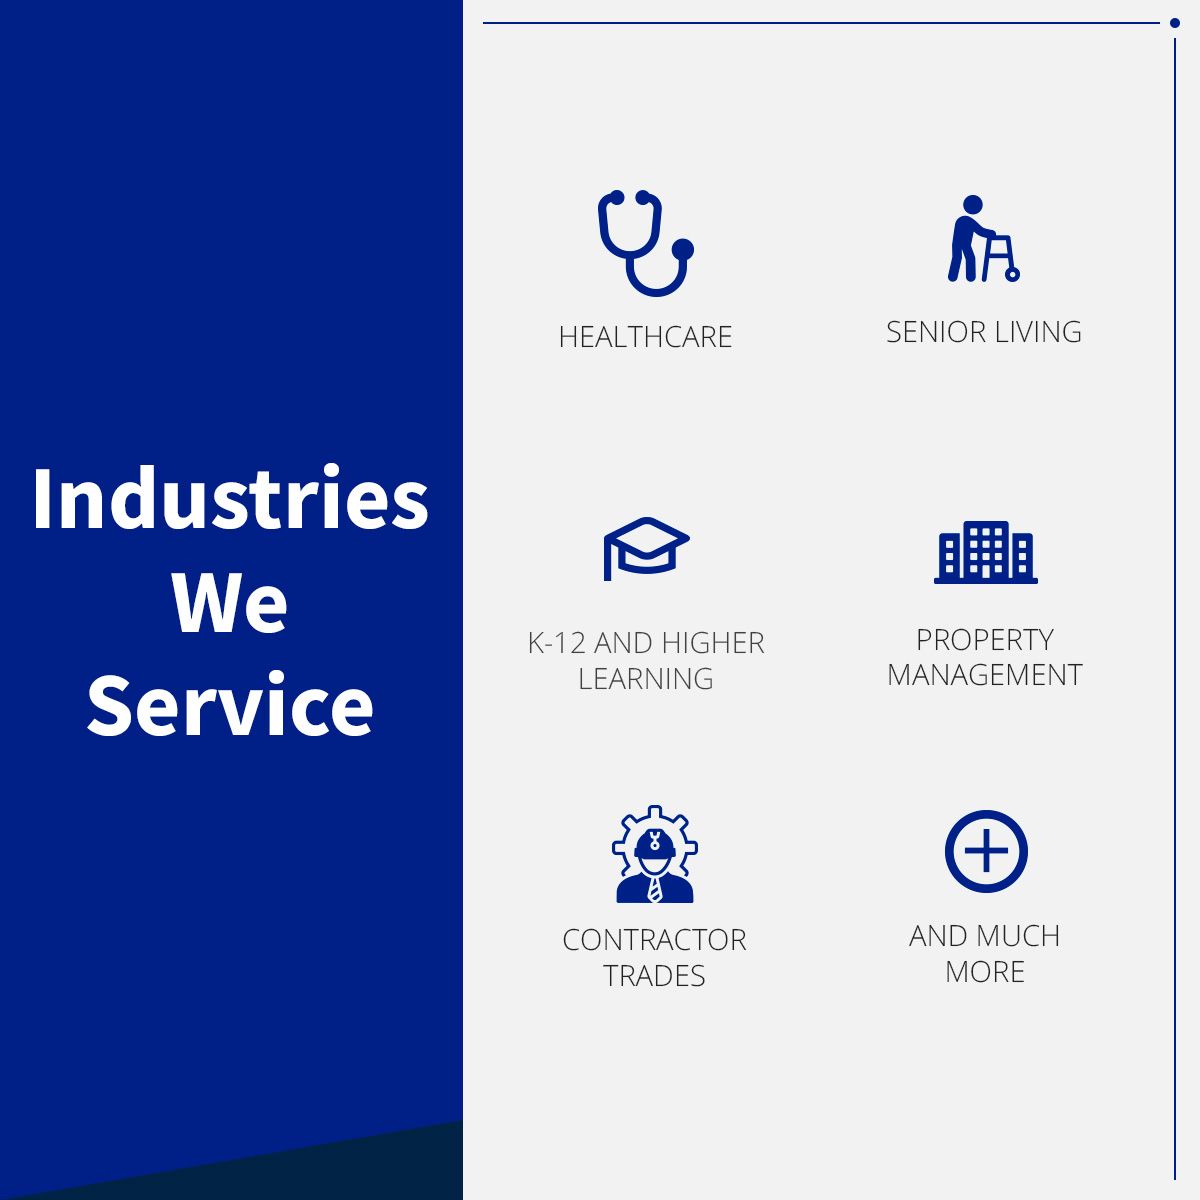 Industries we service